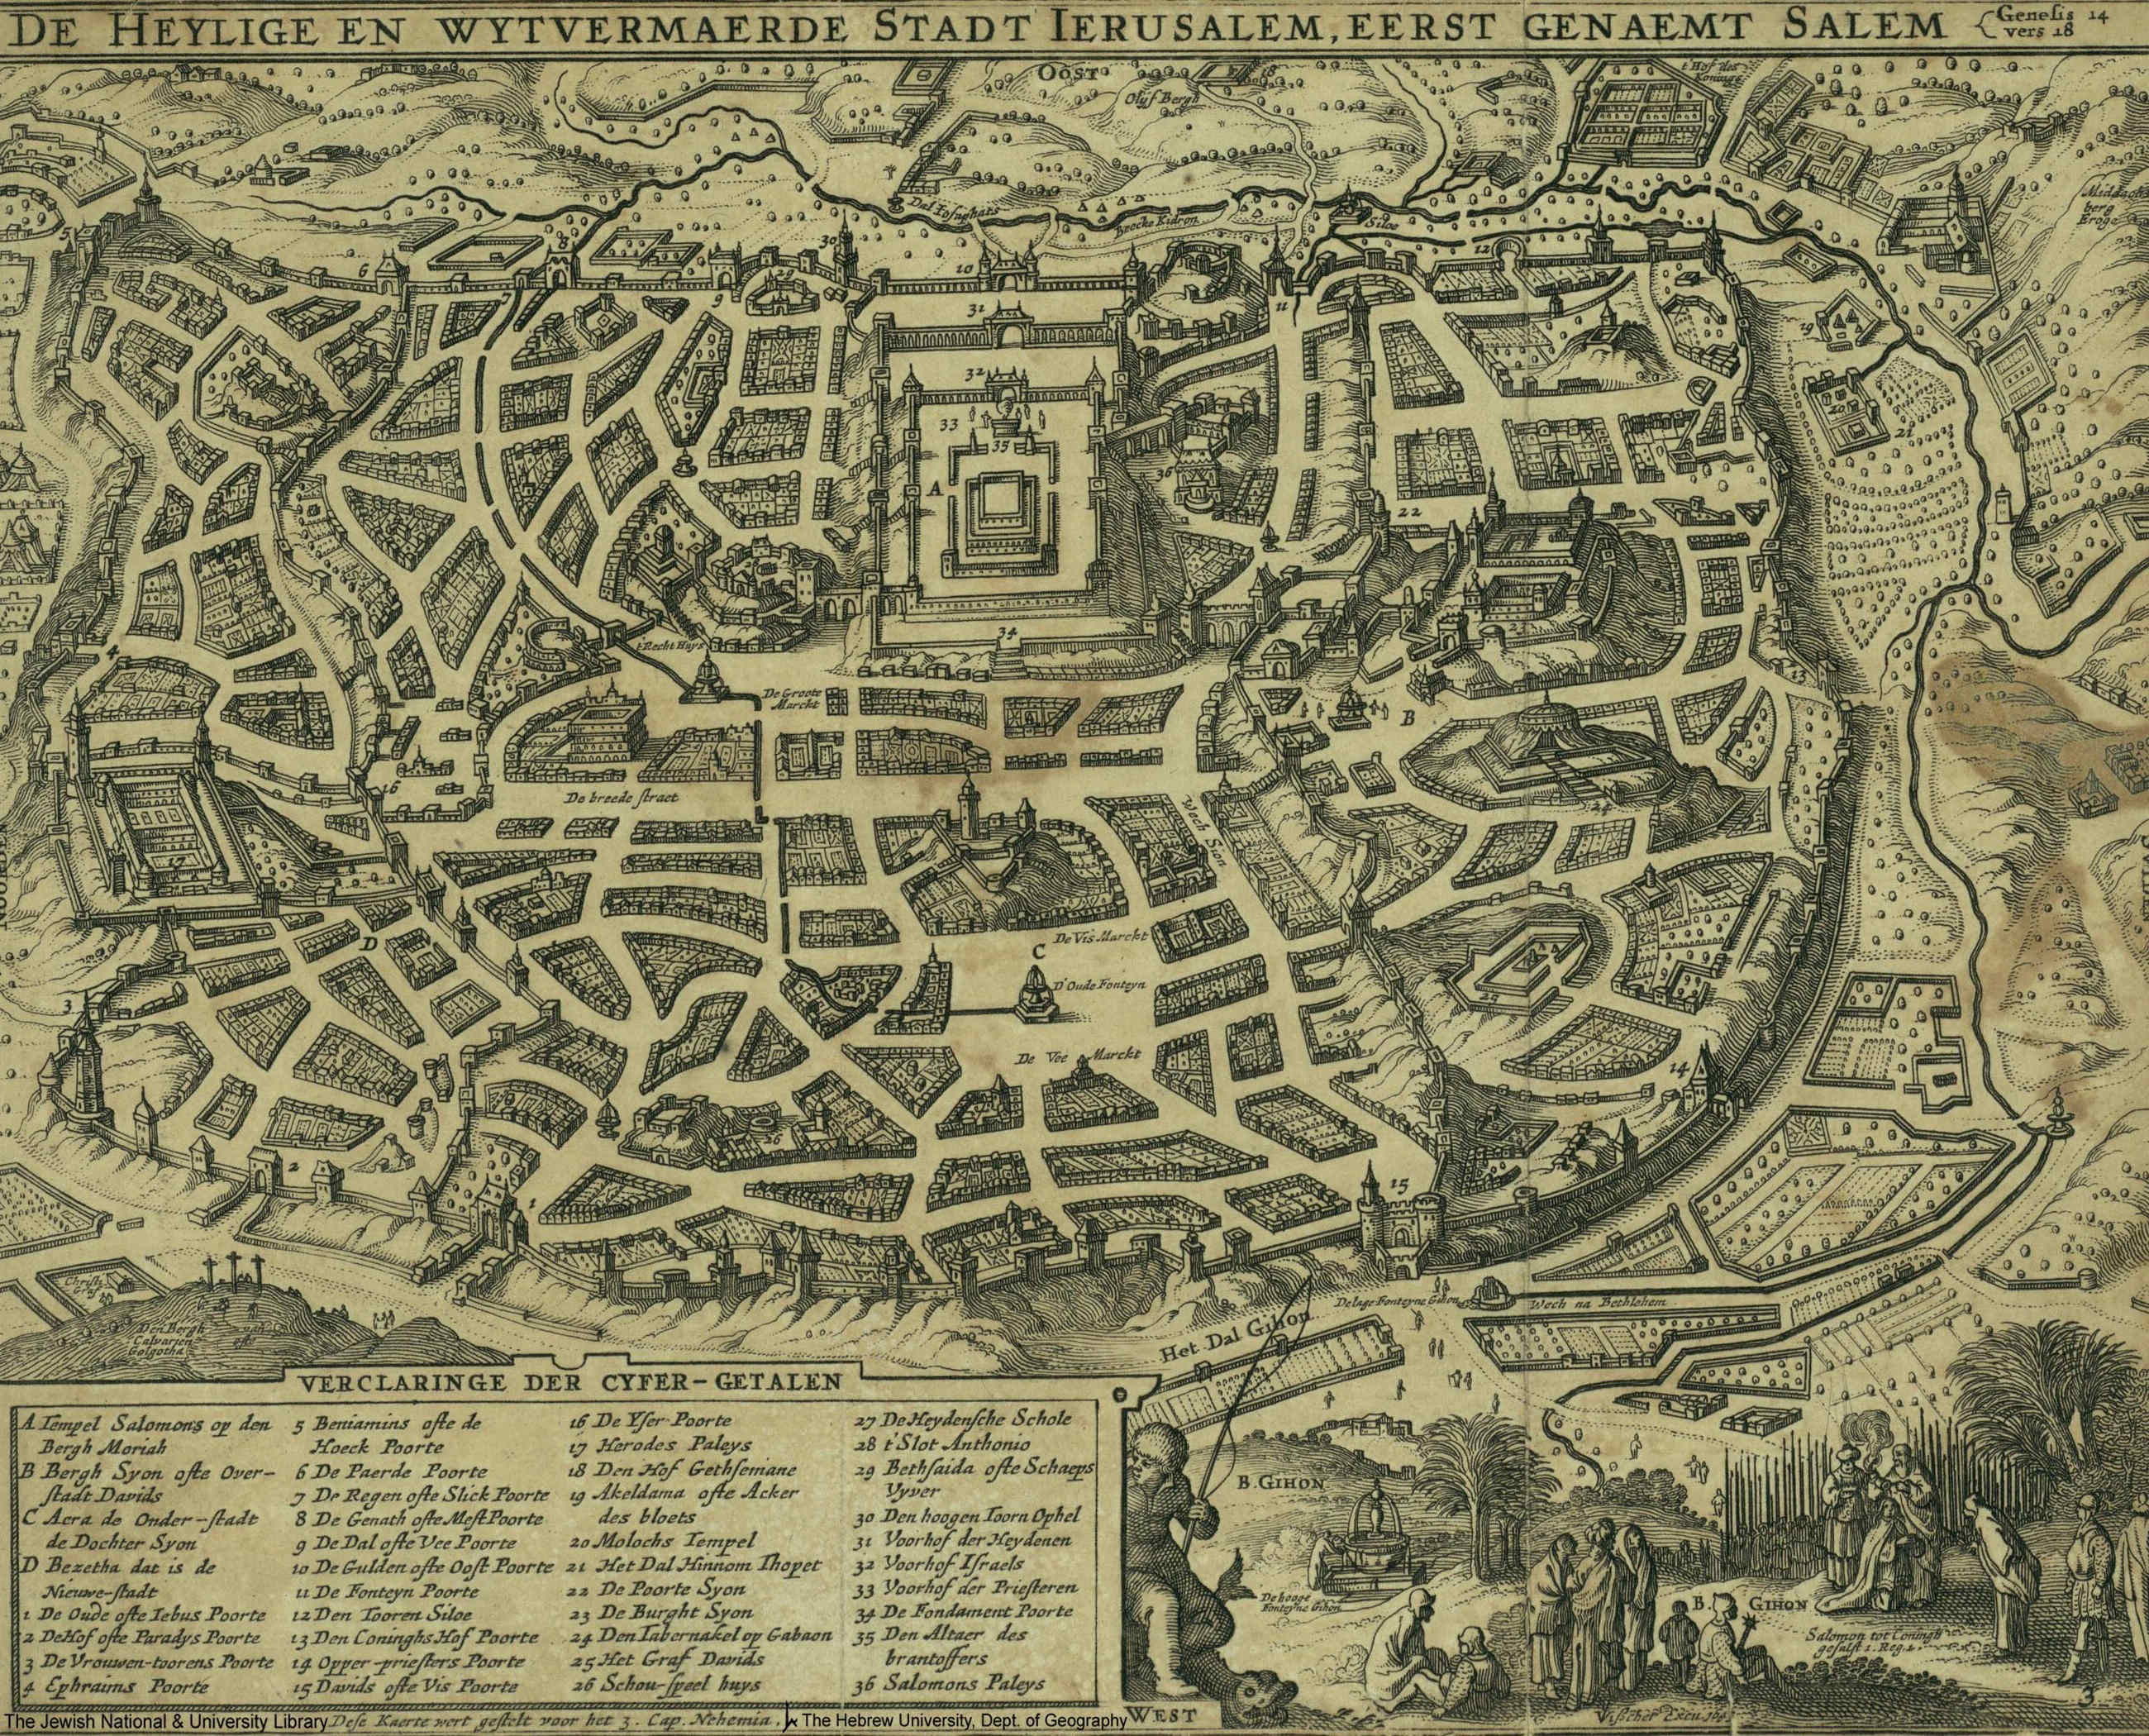 Jerusalem mapas imaginarios Mundo helenístico 52